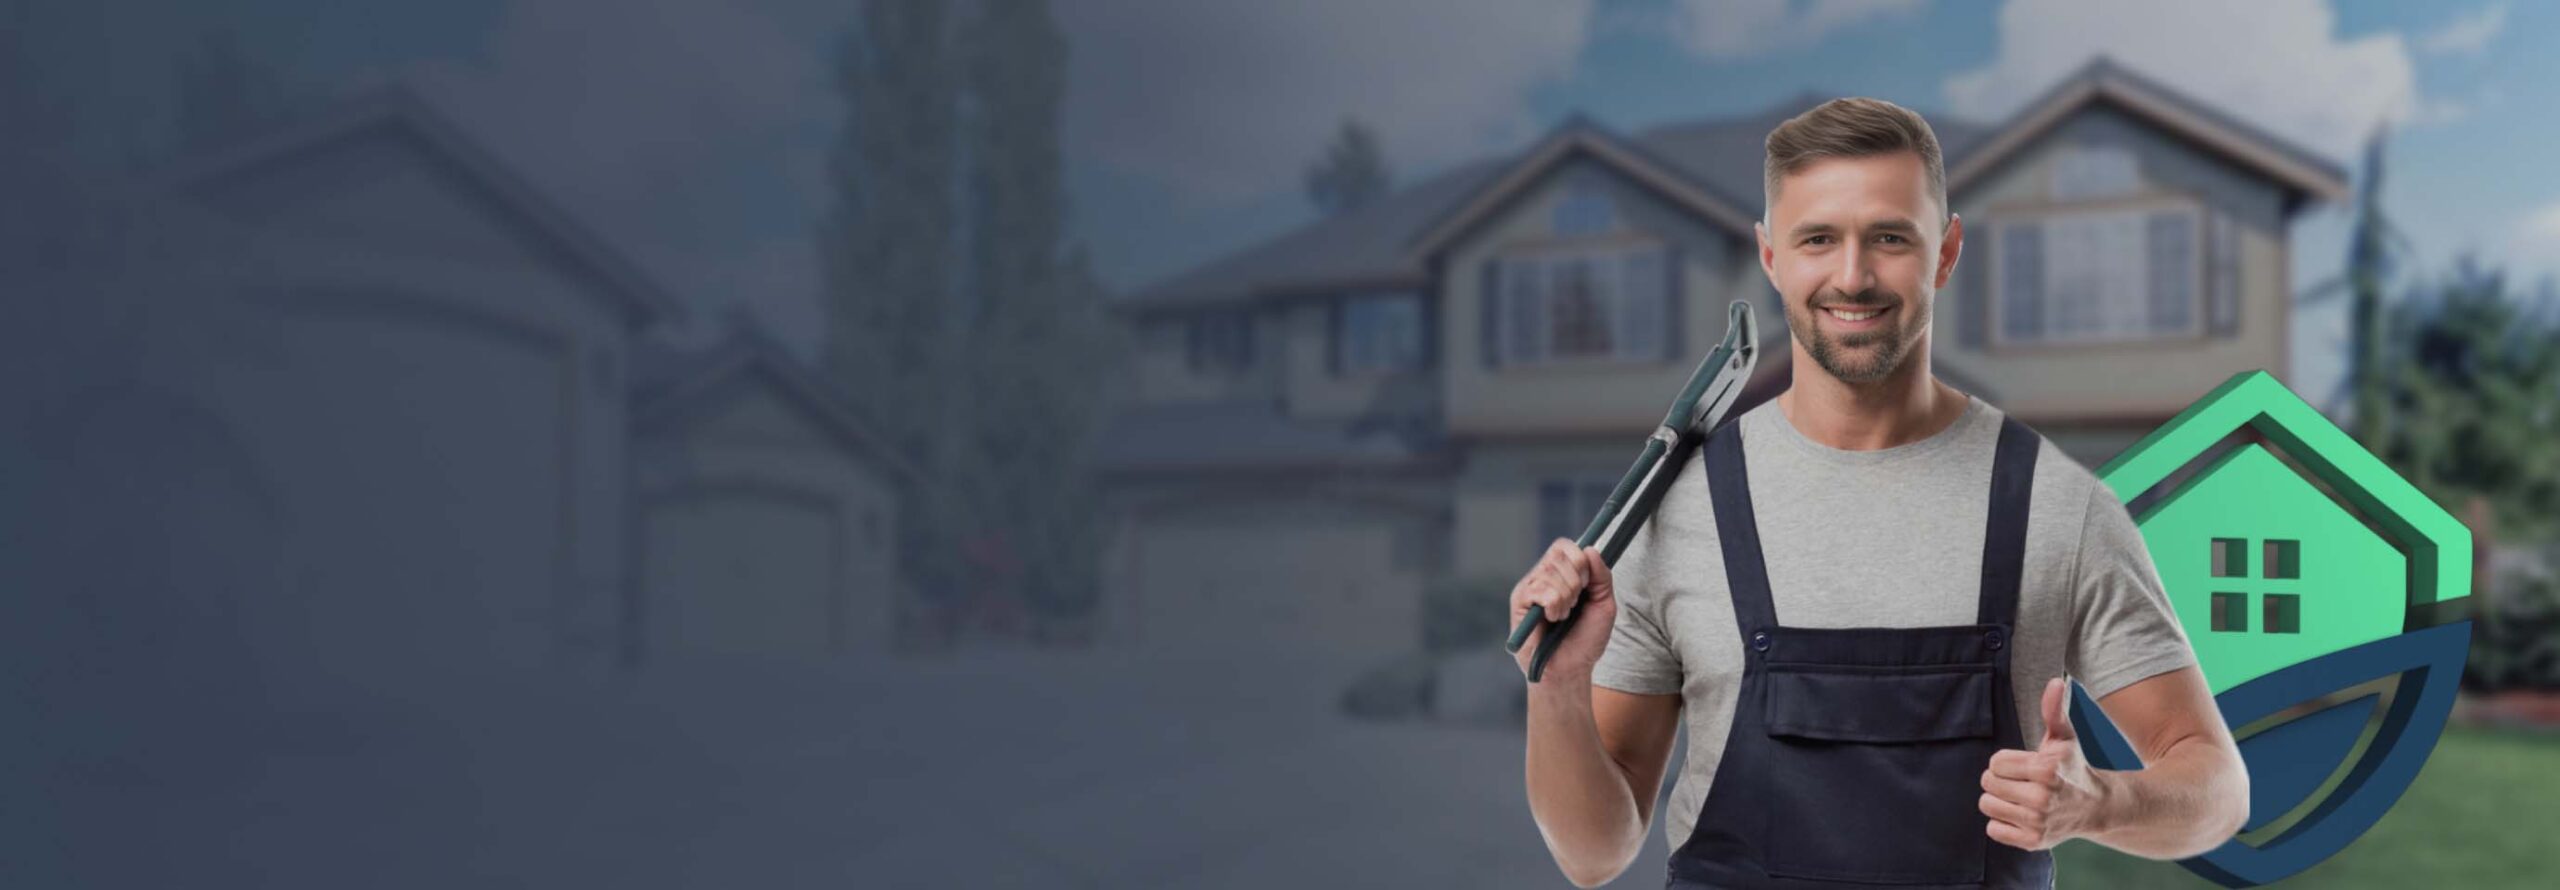 residential home warranty services edmonton